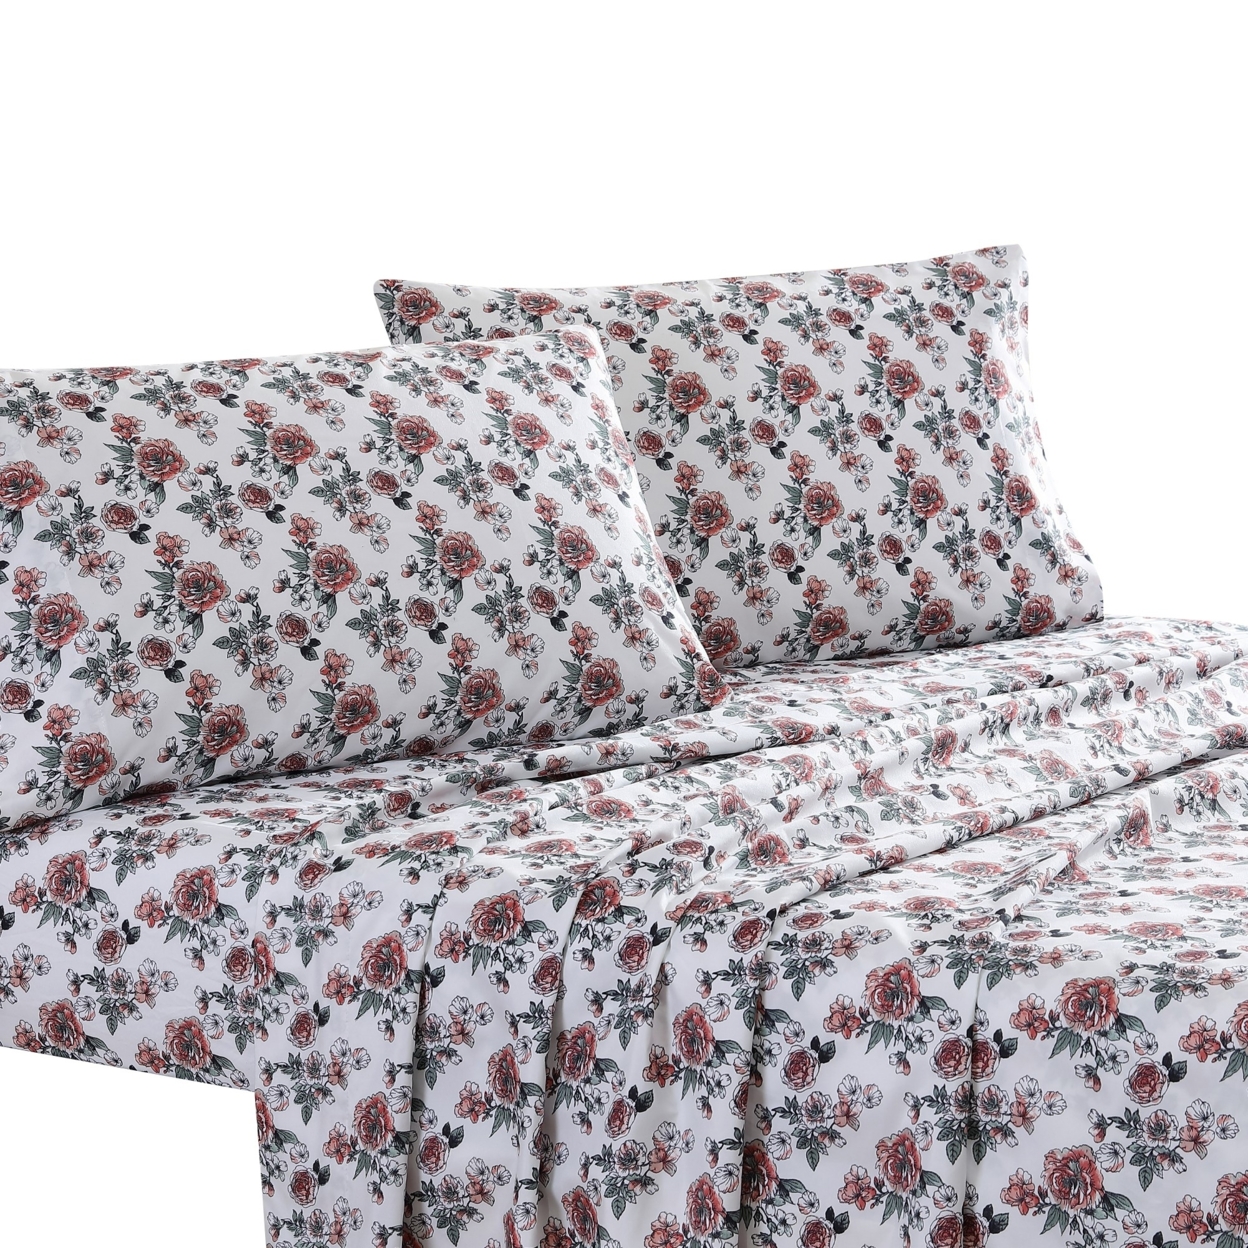 Veria 4 Piece King Bedsheet Set With Rose Print The Urban Port, White And Pink- Saltoro Sherpi